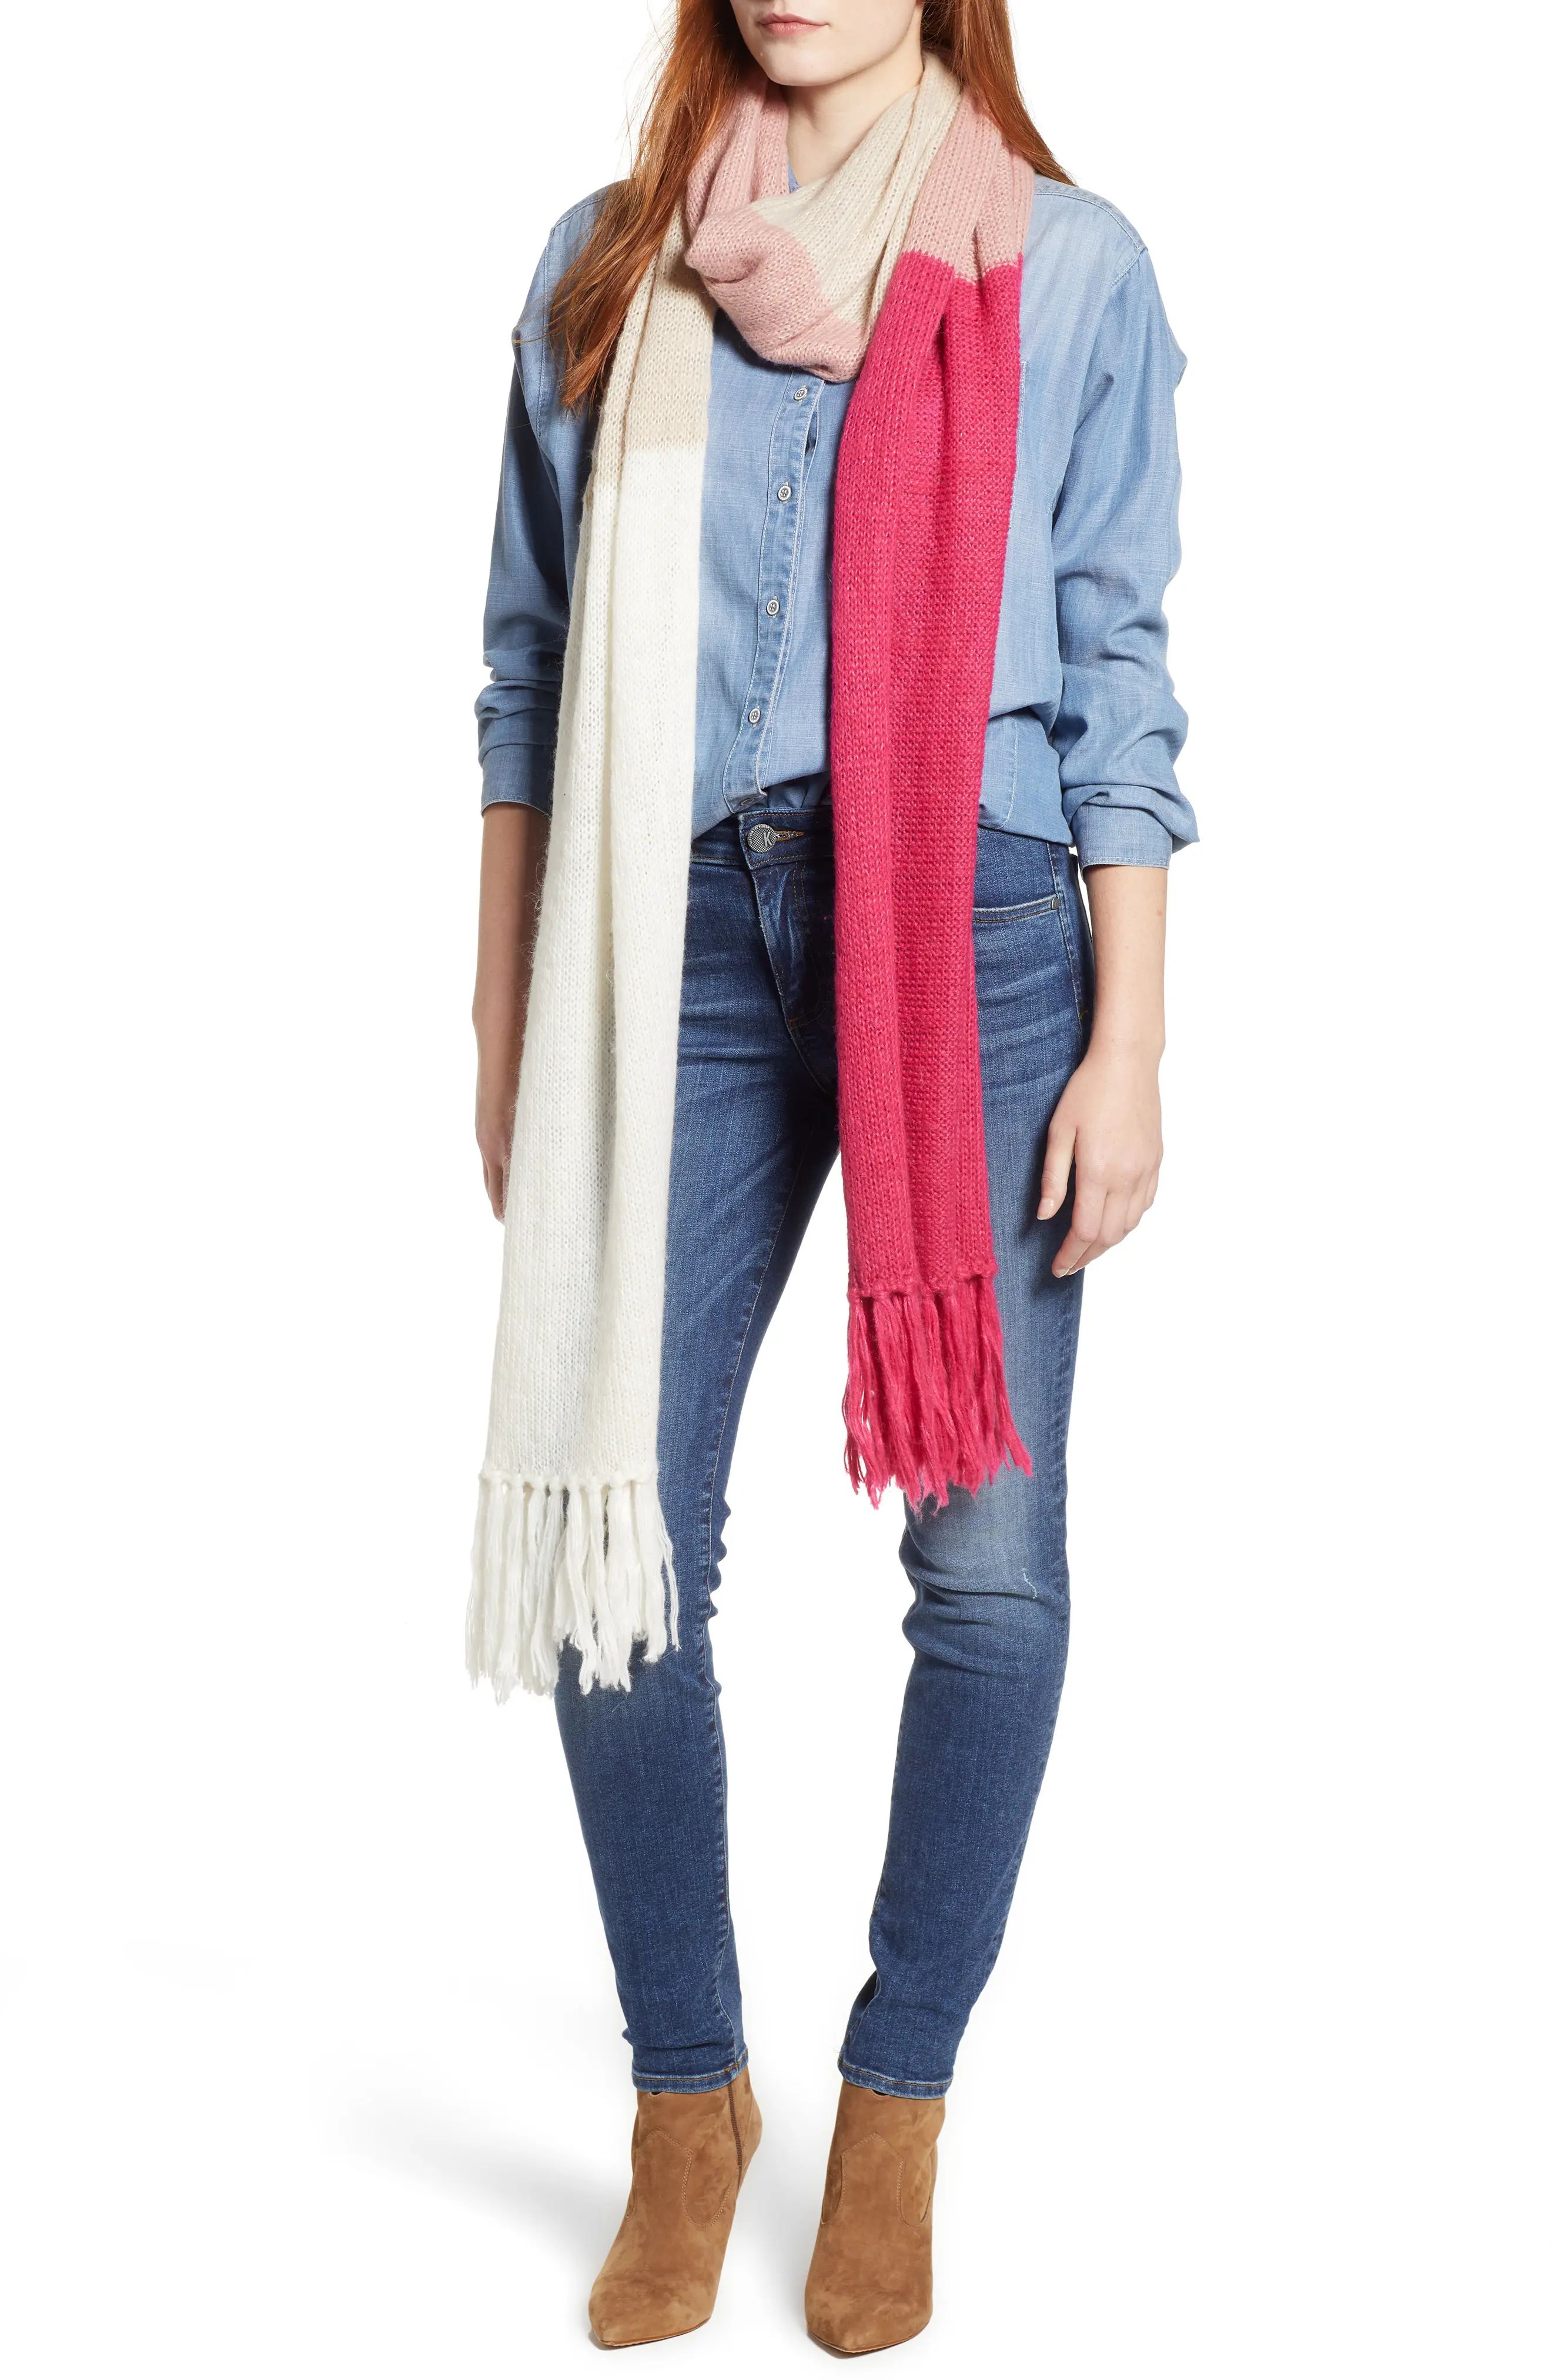 kate spade new york brushed colorblock blanket scarf | Nordstrom